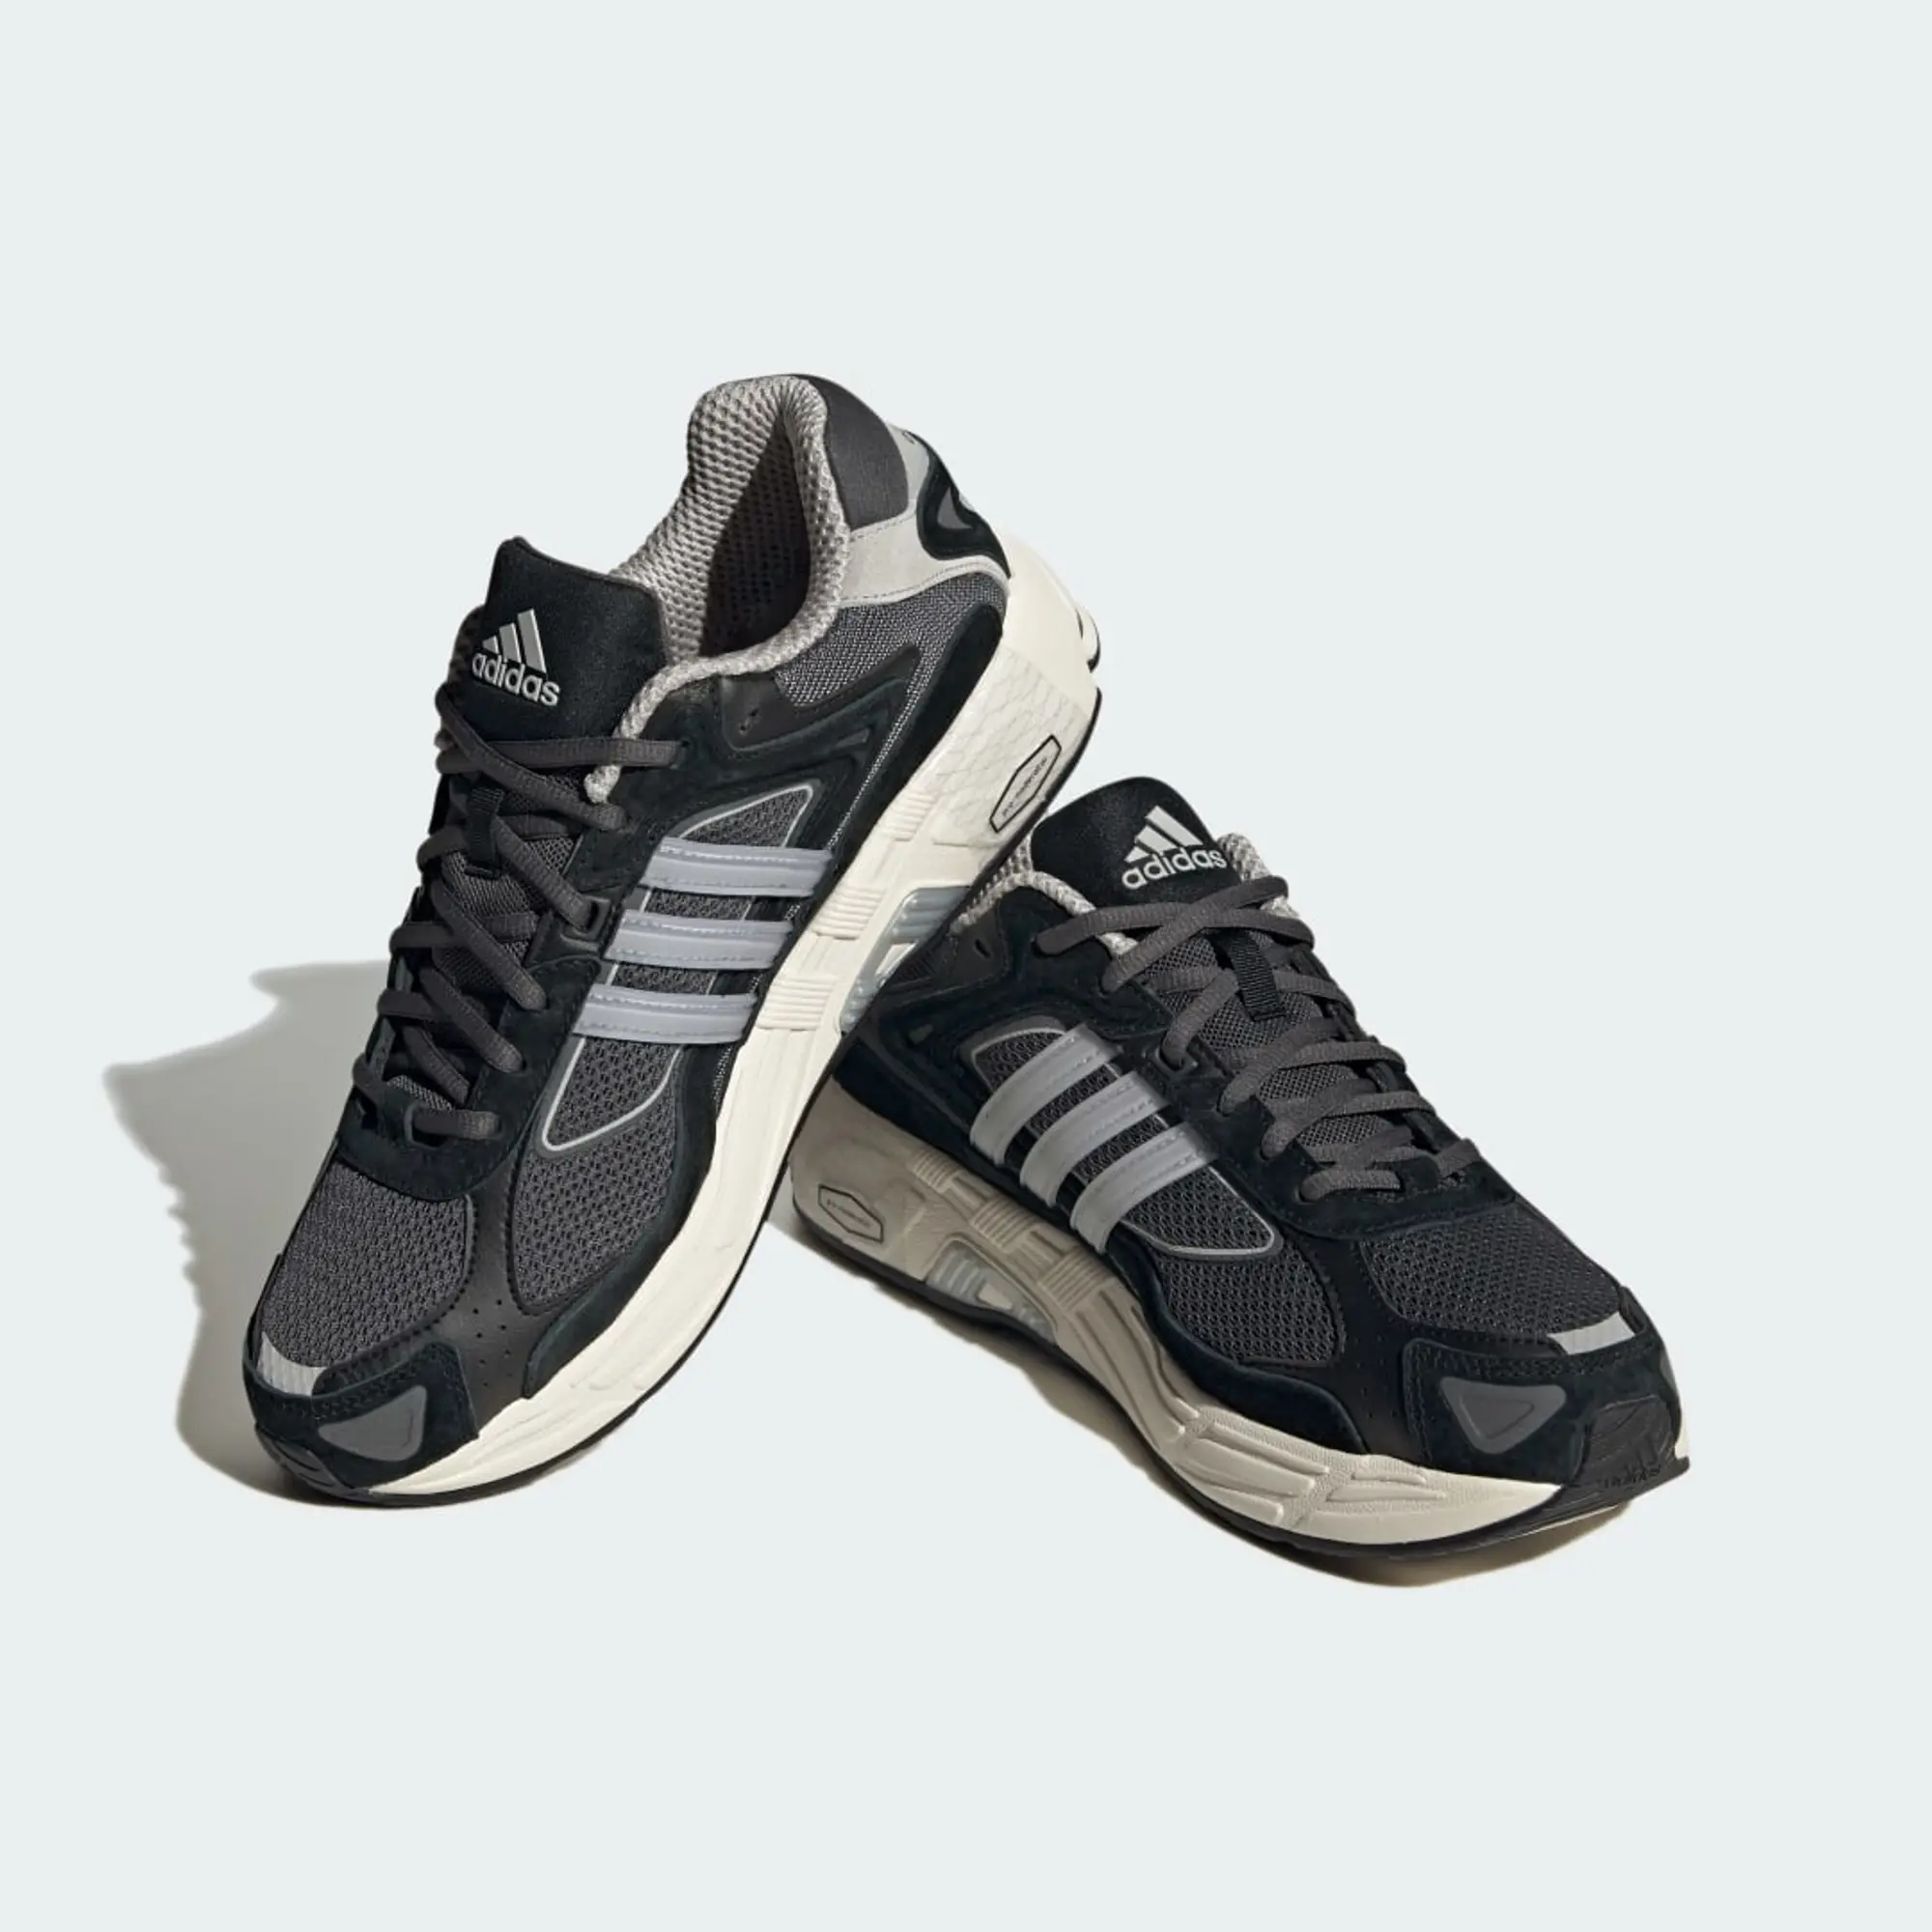 Adidas Response CL Grey/Core Black